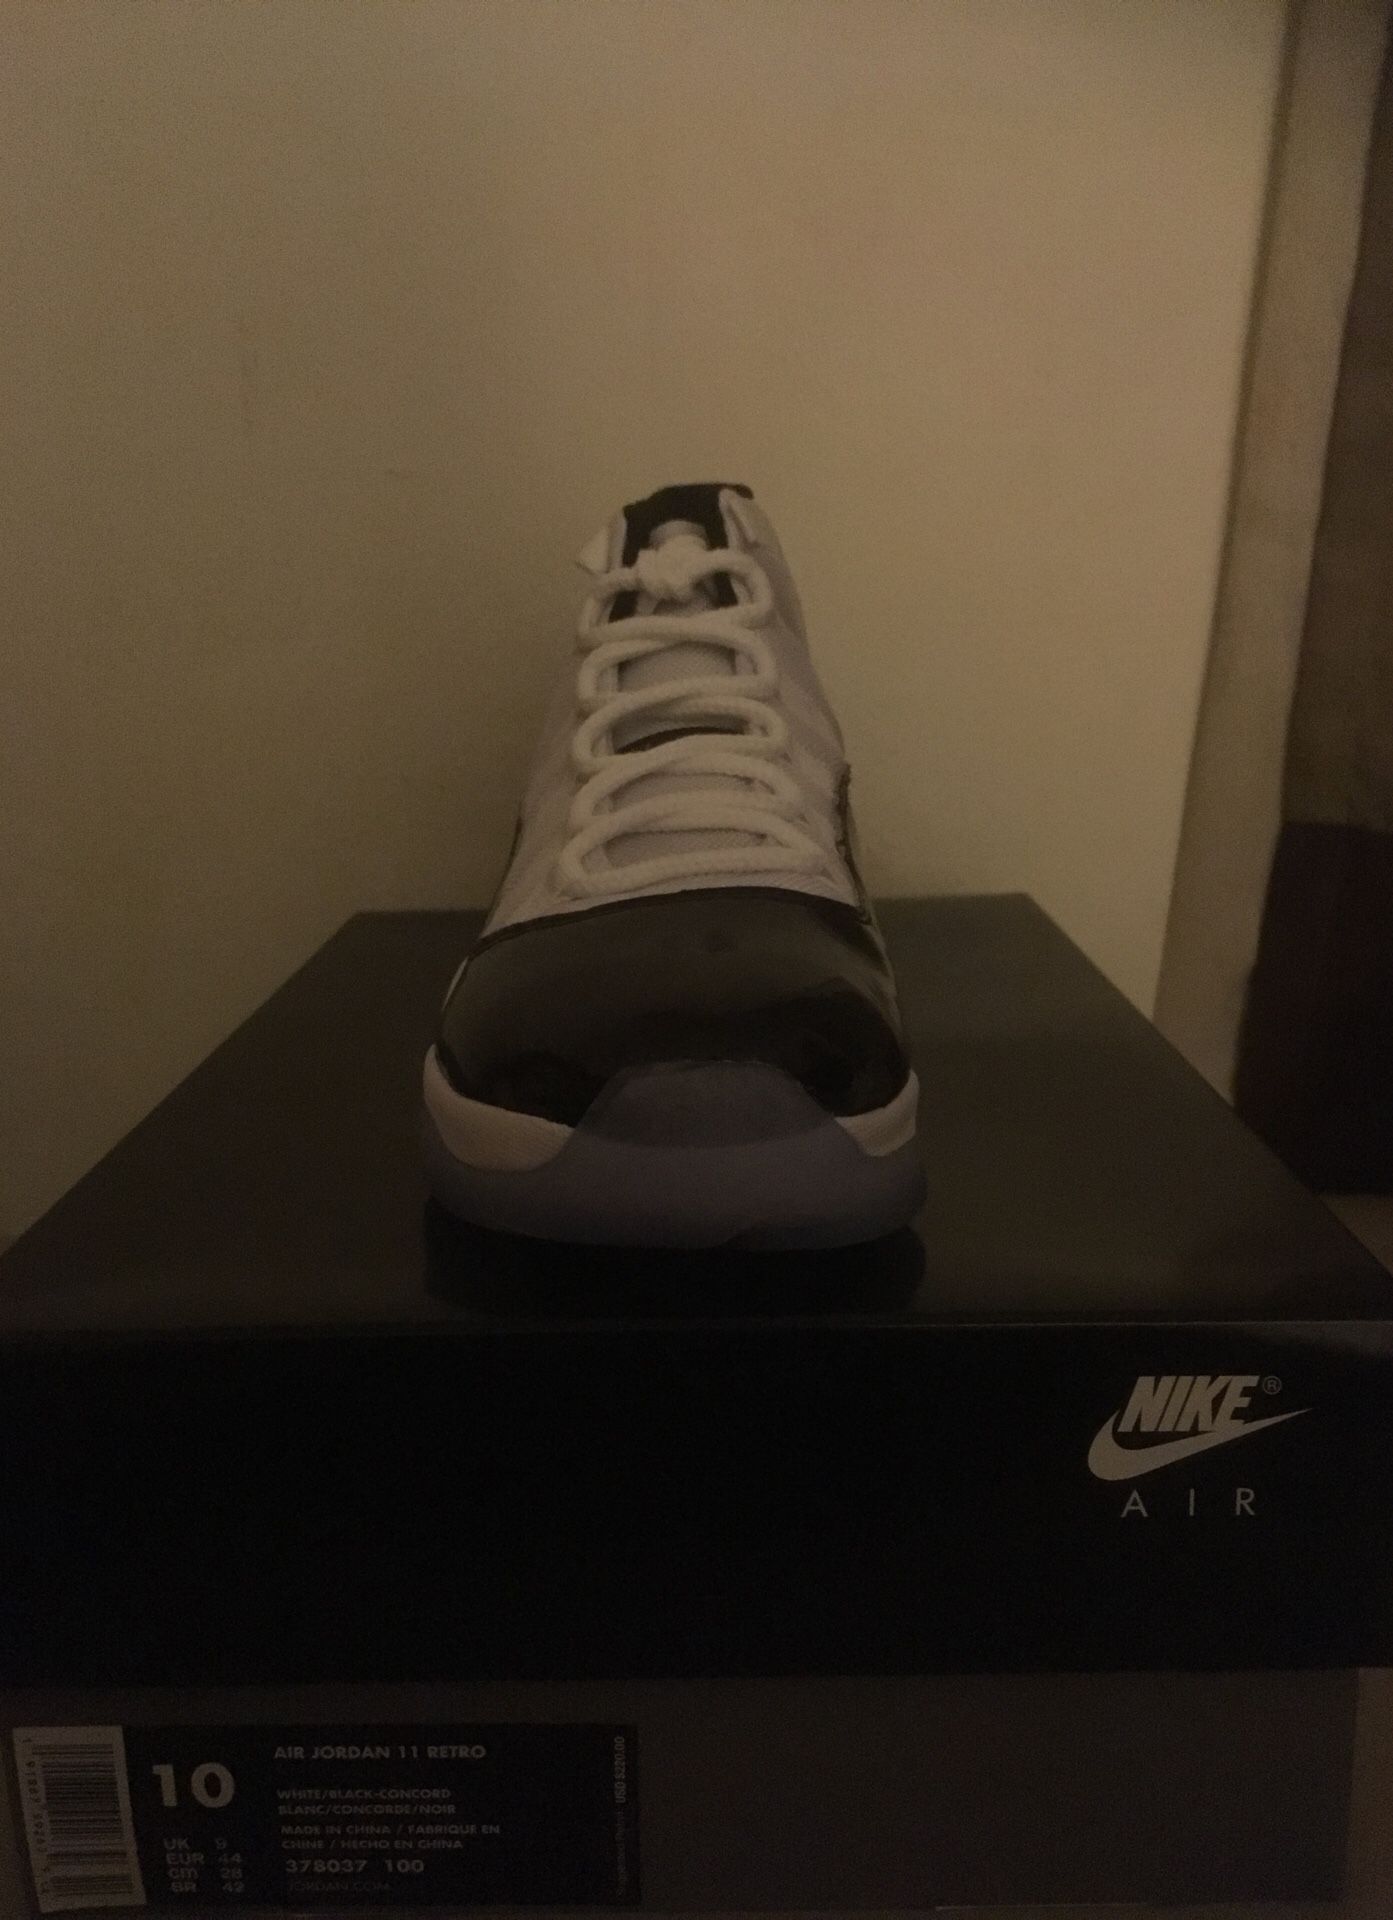 Nike Air Jordan 11 IX “Concord” Size 10